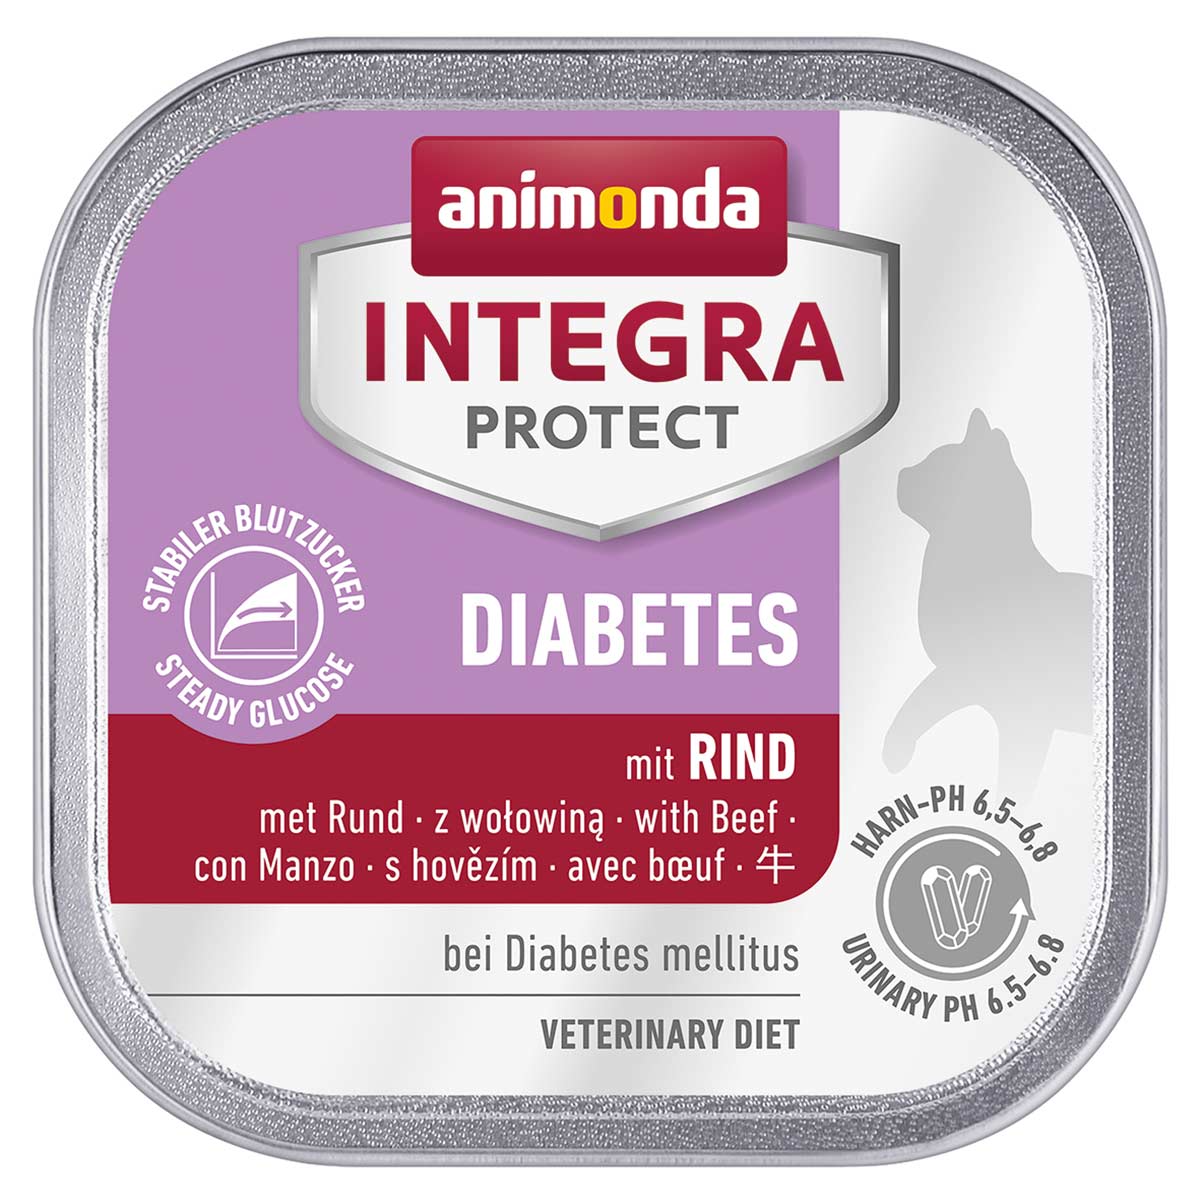 animonda INTEGRA PROTECT Diabetes mit Rind 16x100g von animonda Integra Protect